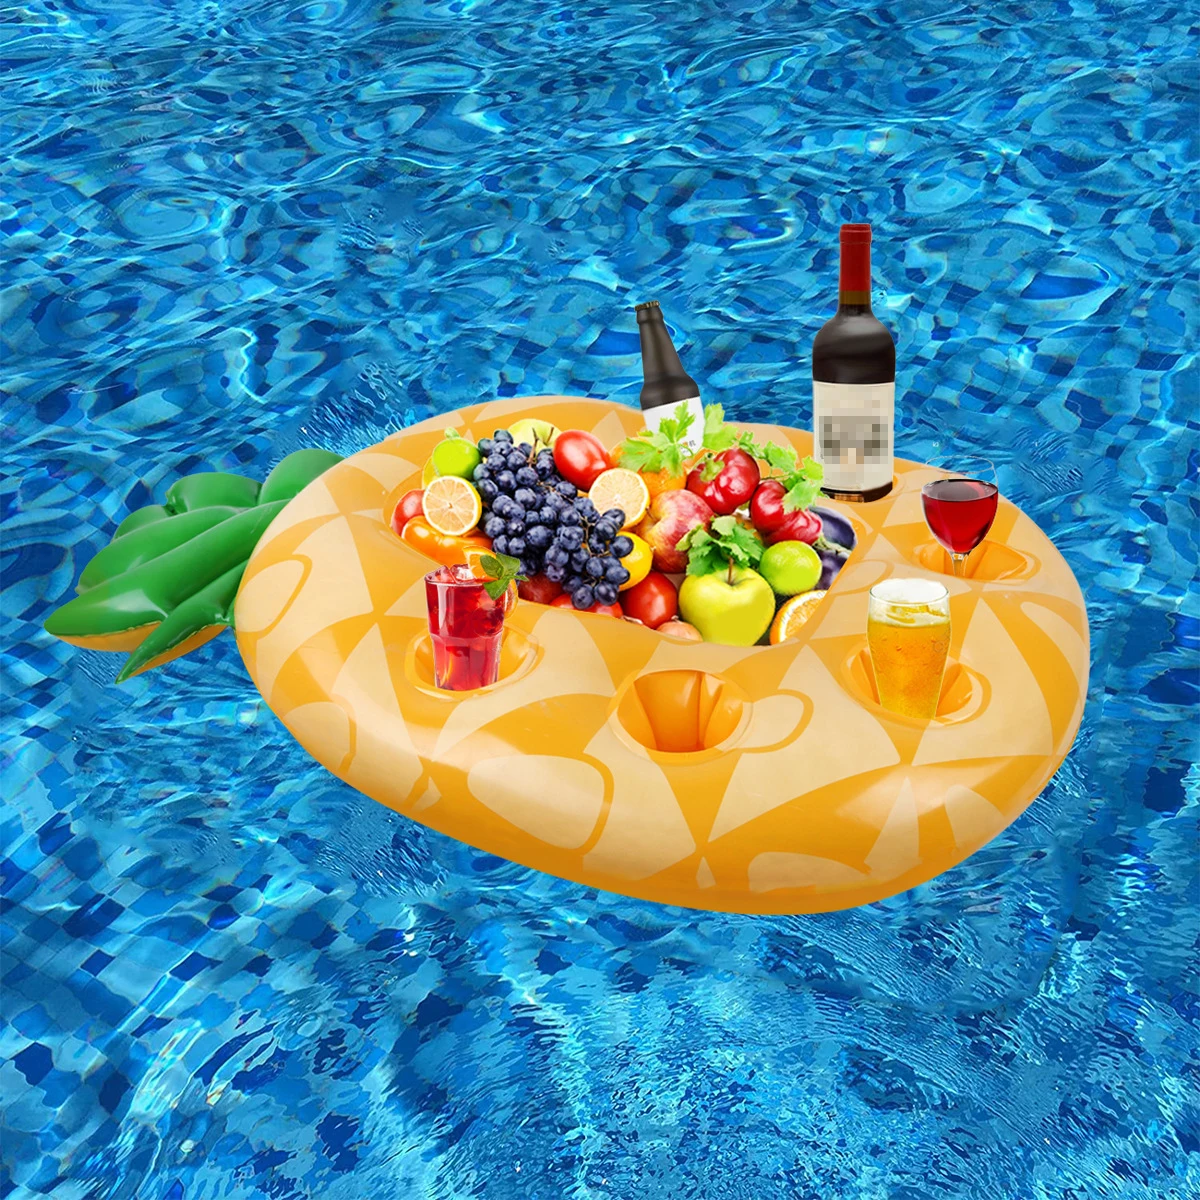 https://ae01.alicdn.com/kf/S731195861160452892d29eadb4a302b9v/Inflatable-Pool-Drink-Holder-Floating-Summer-Party-Bucket-Cup-Holder-Drinking-Bar-Tray-for-Hot-Tub.jpg